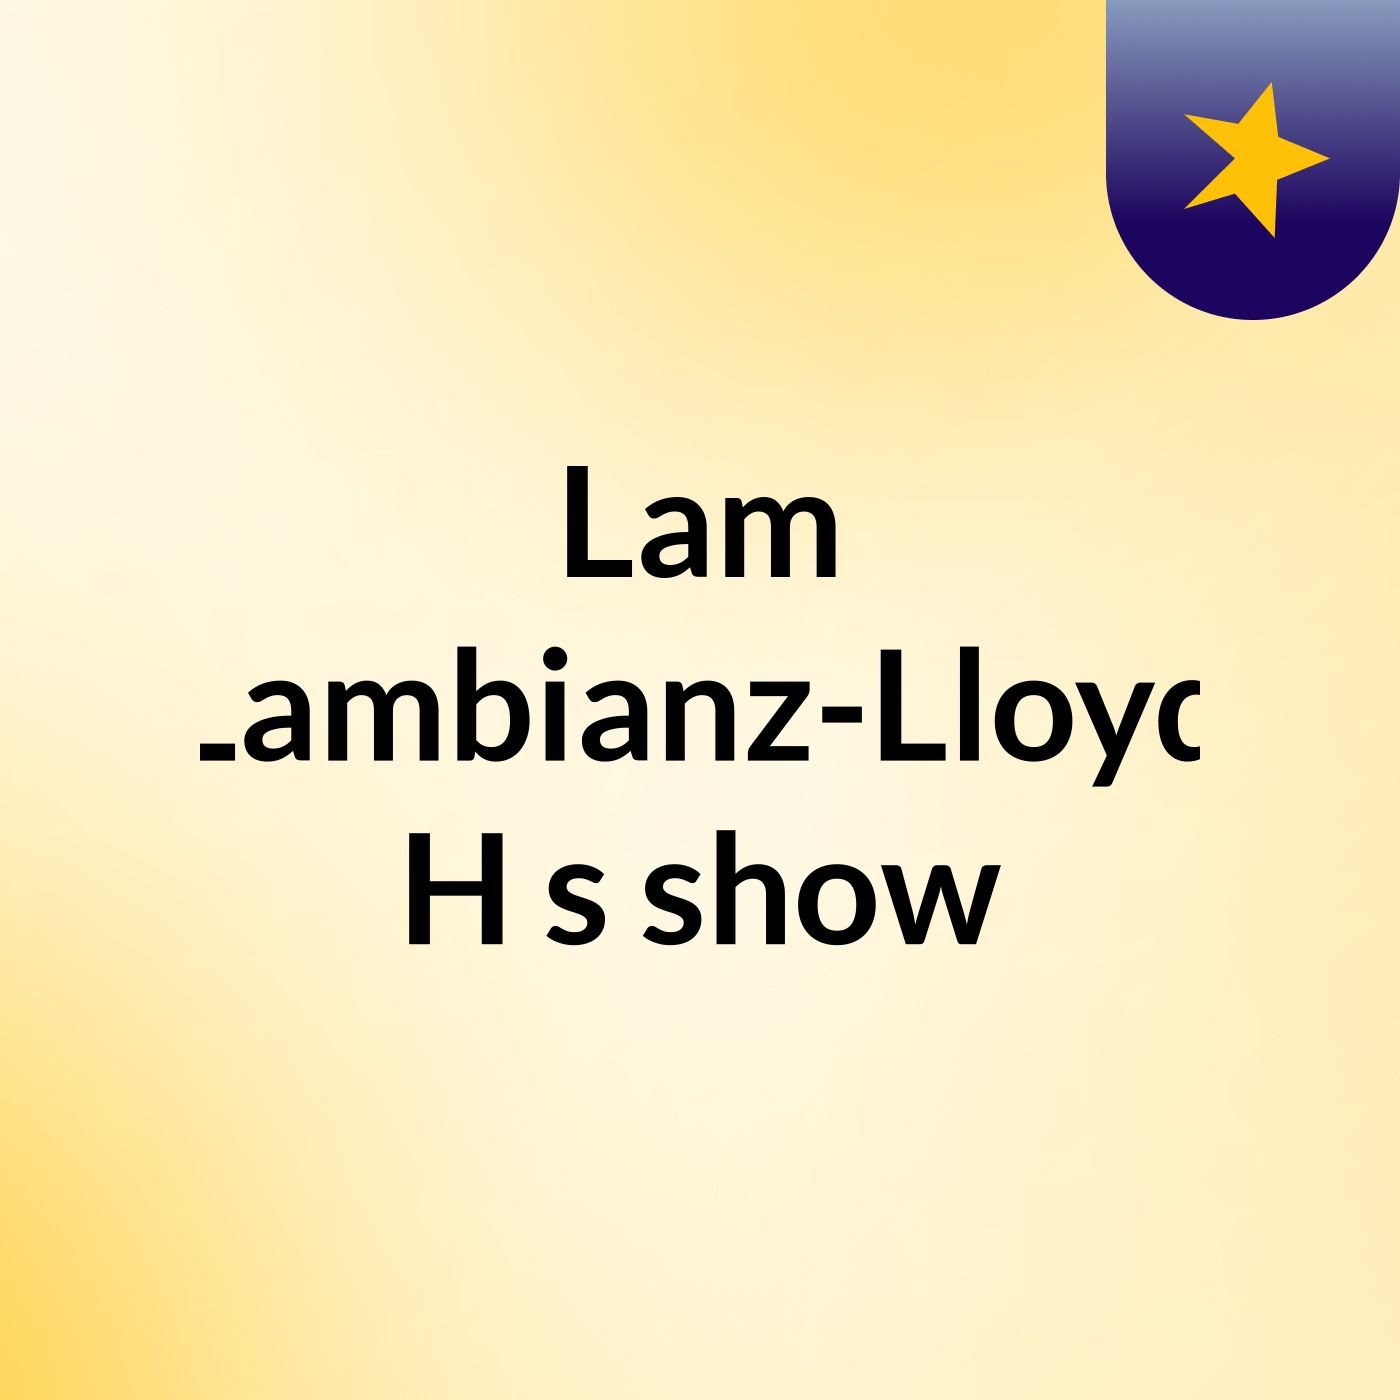 Lam Lambianz-Lloyd H's show